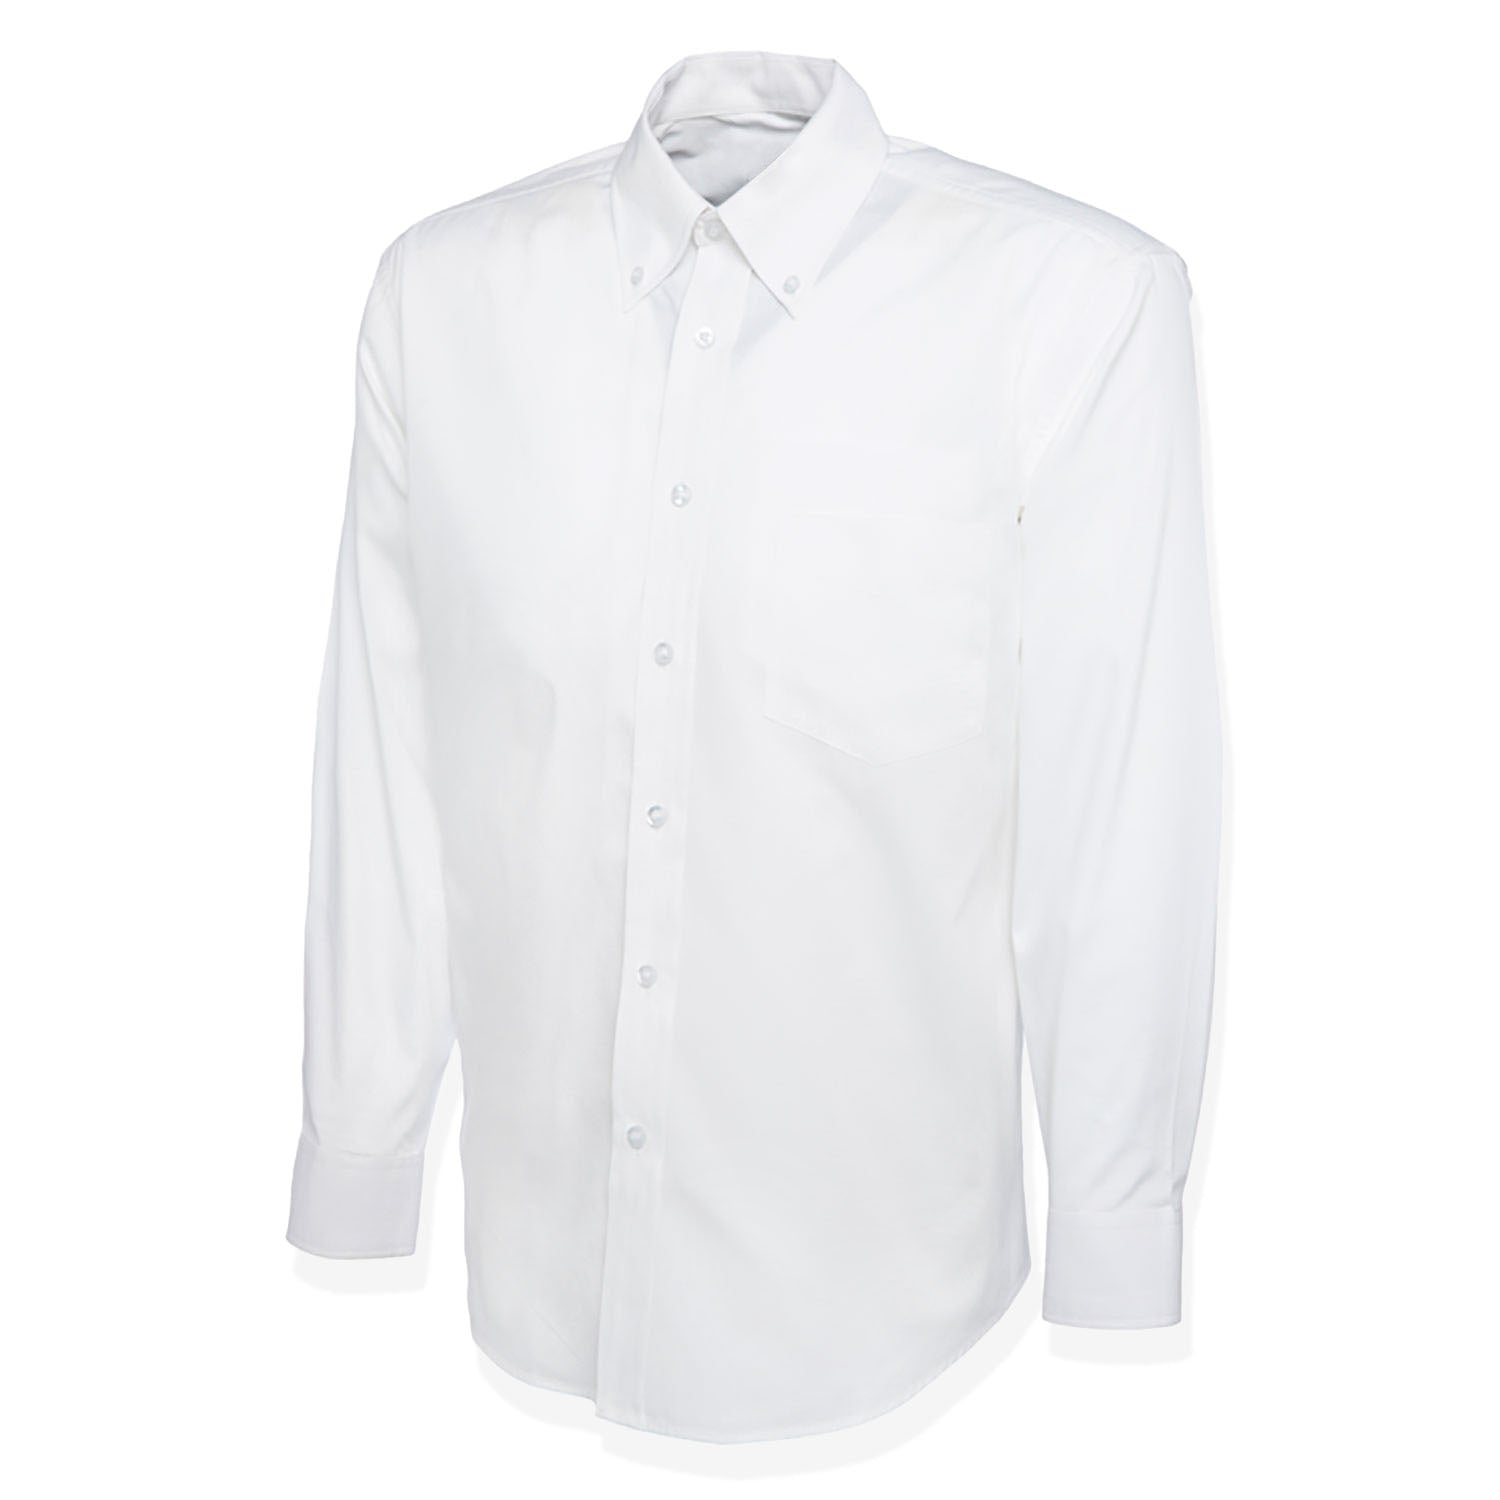 NAVY Men's White Long Sleeve Dress Shirt - No Epaulets | Uniform ...